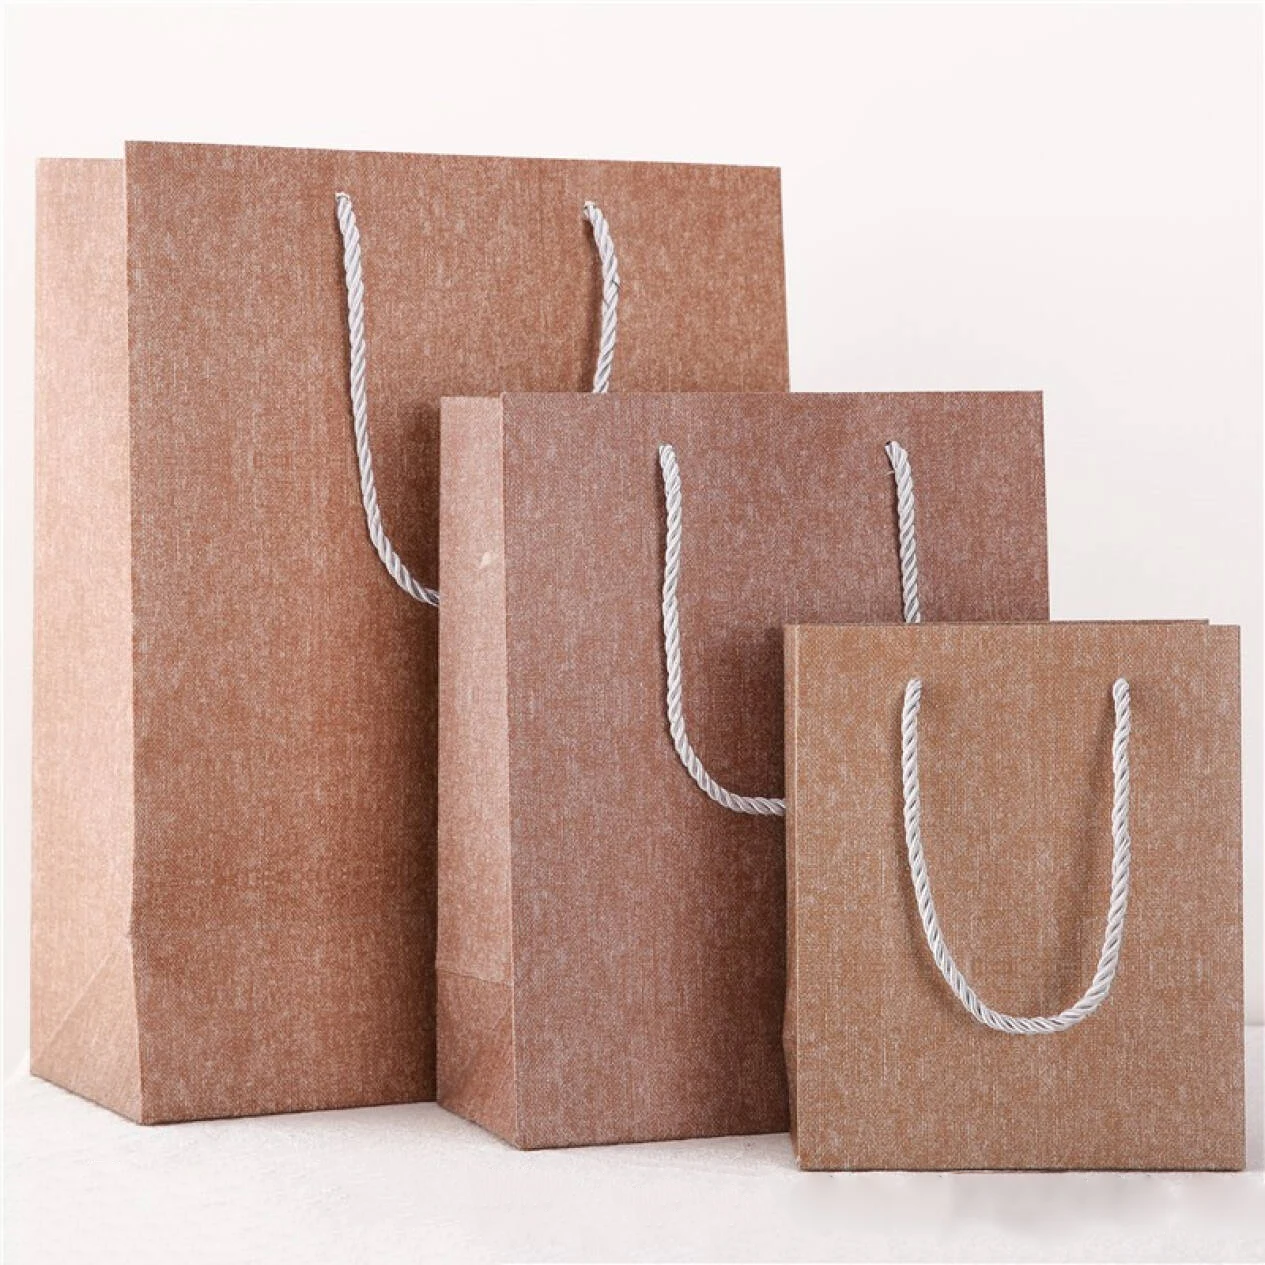 Pendants Handled Brown Kraft Paper Carry Bag, For Shopping, Bag